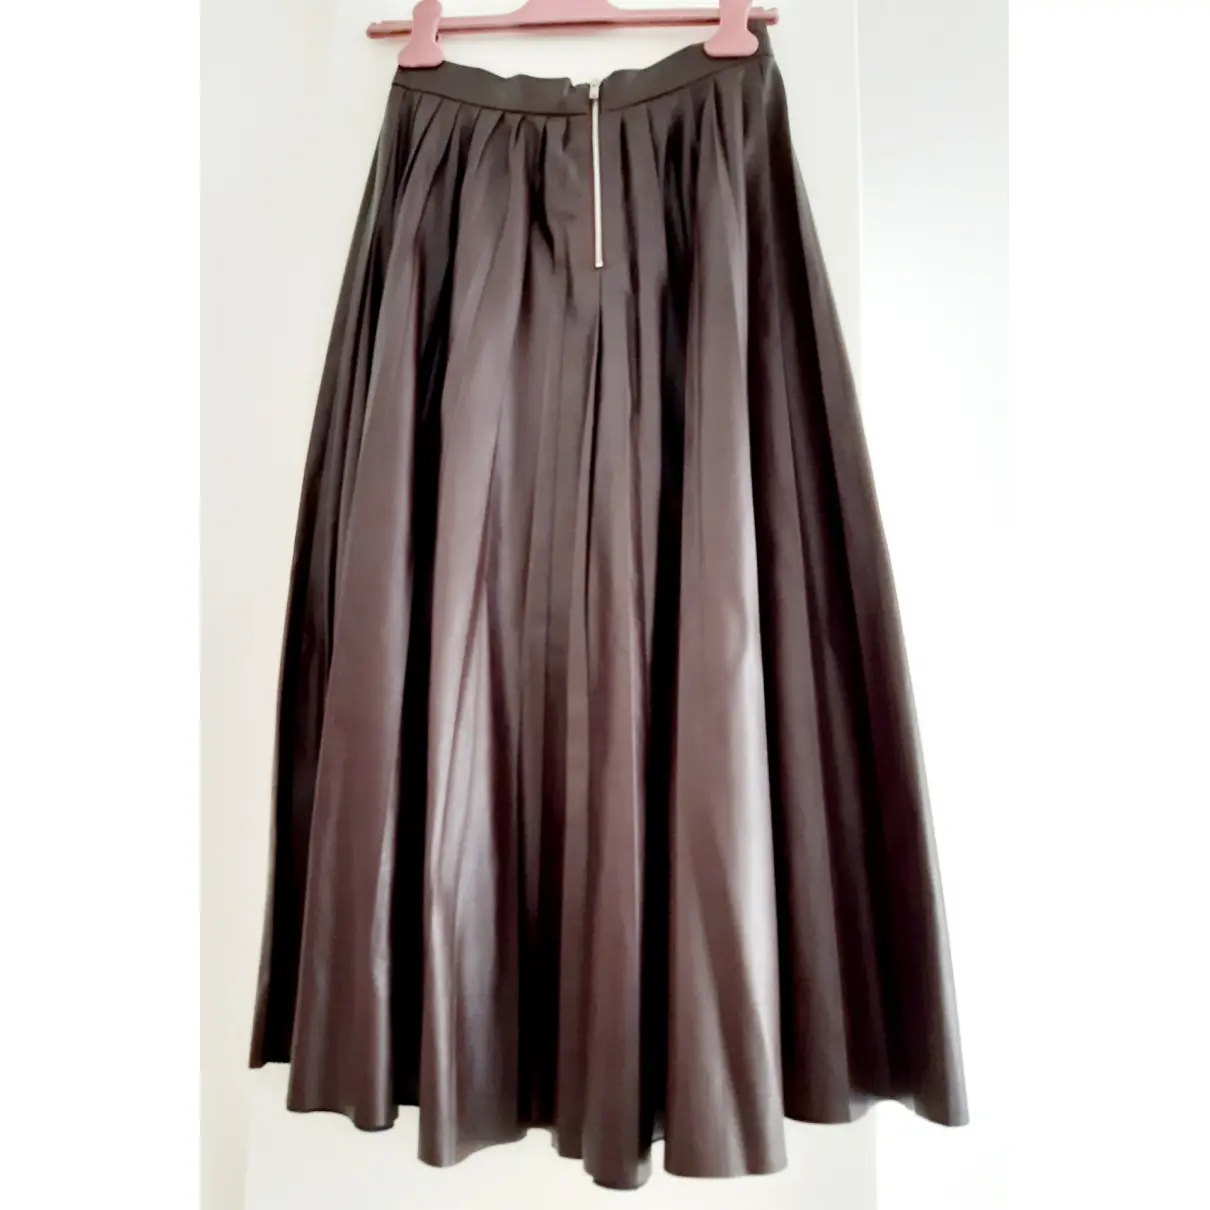 Buy Zara Vegan leather maxi skirt online